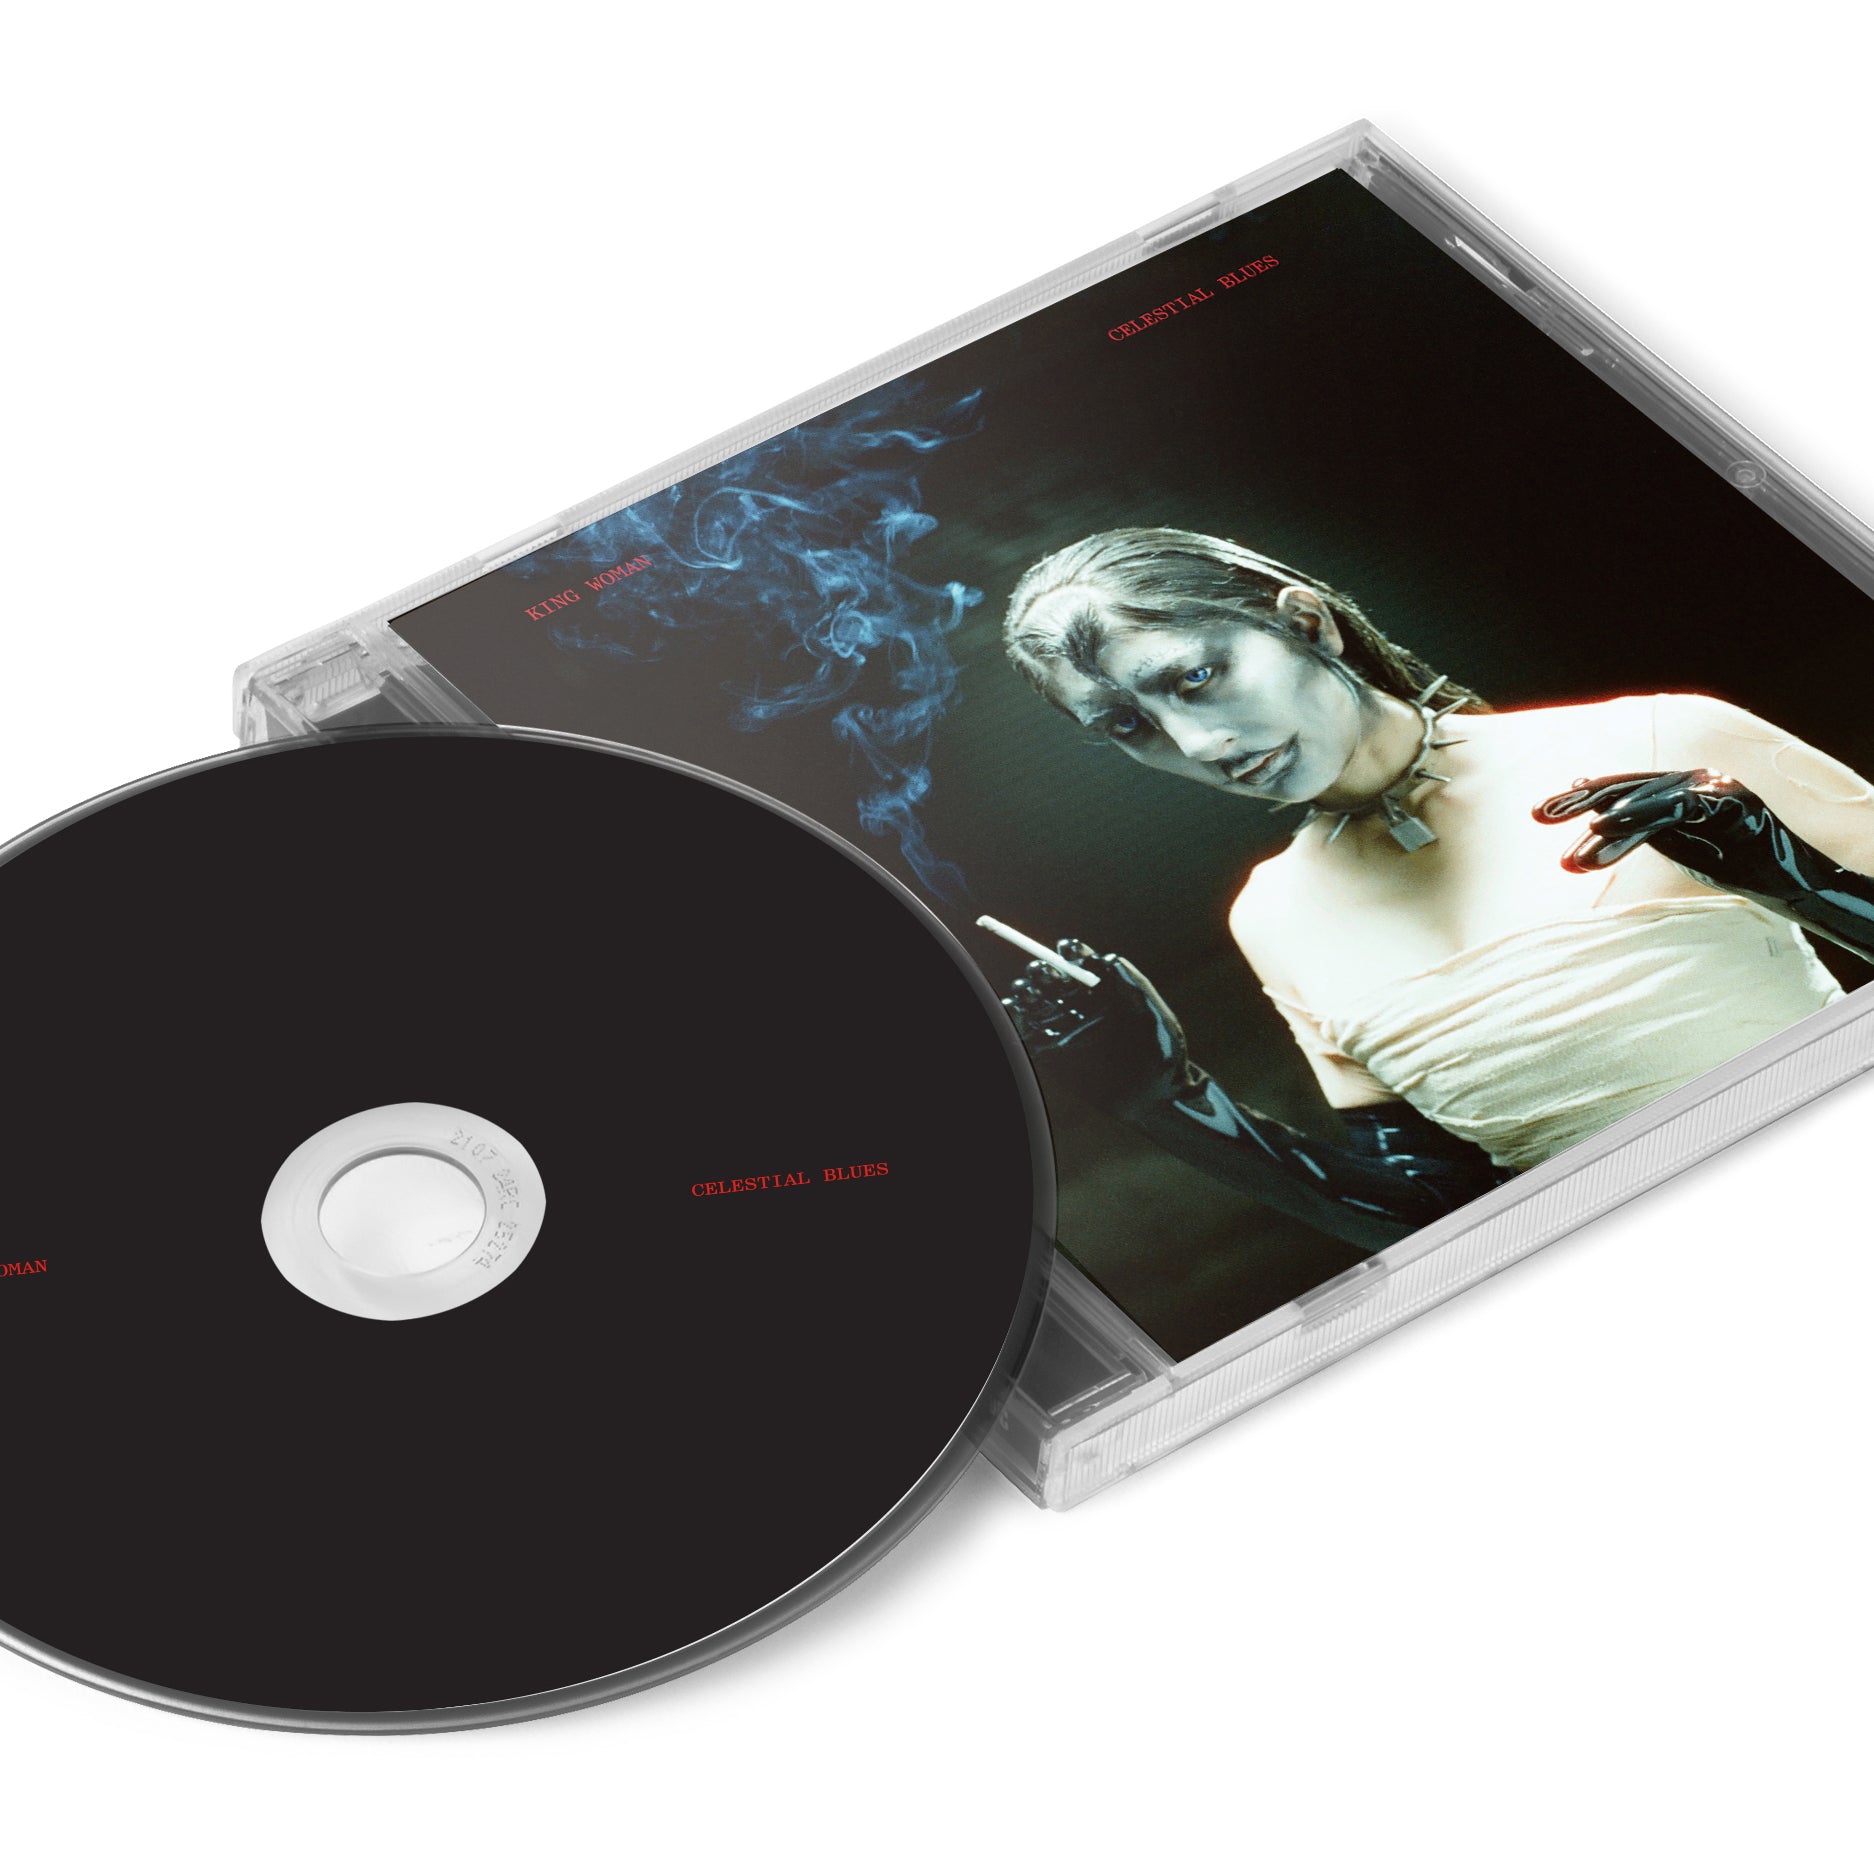 King Woman "Celestial Blues" CD